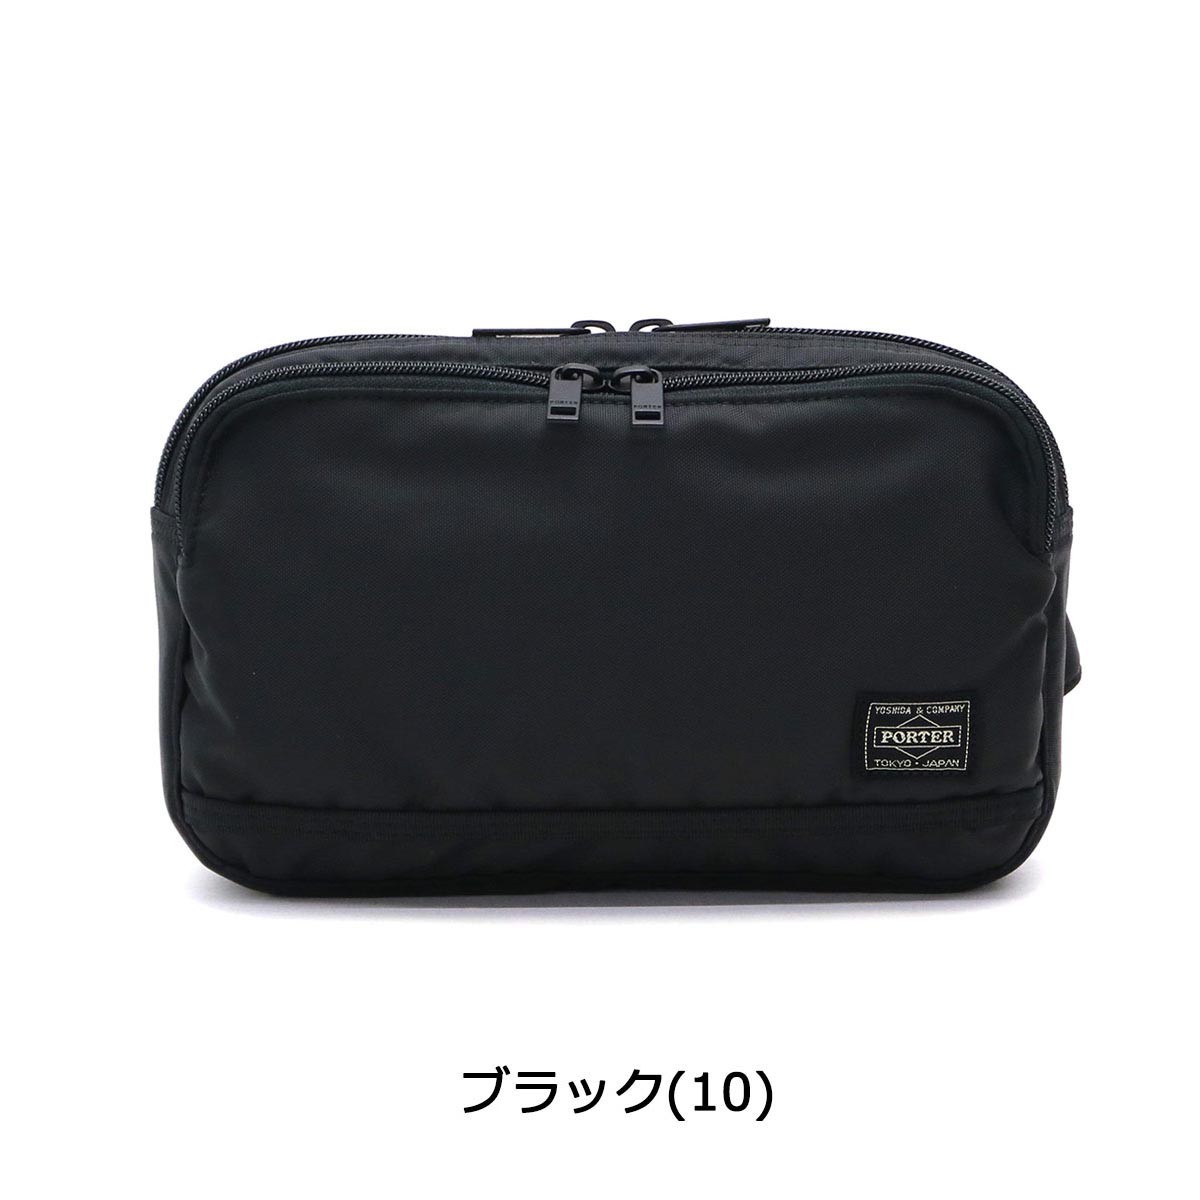  Porter flash waist bag 689-05942 body bag Yoshida bag PORTER FLASH diagonal .. bag made in Japan men's lady's nylon light 